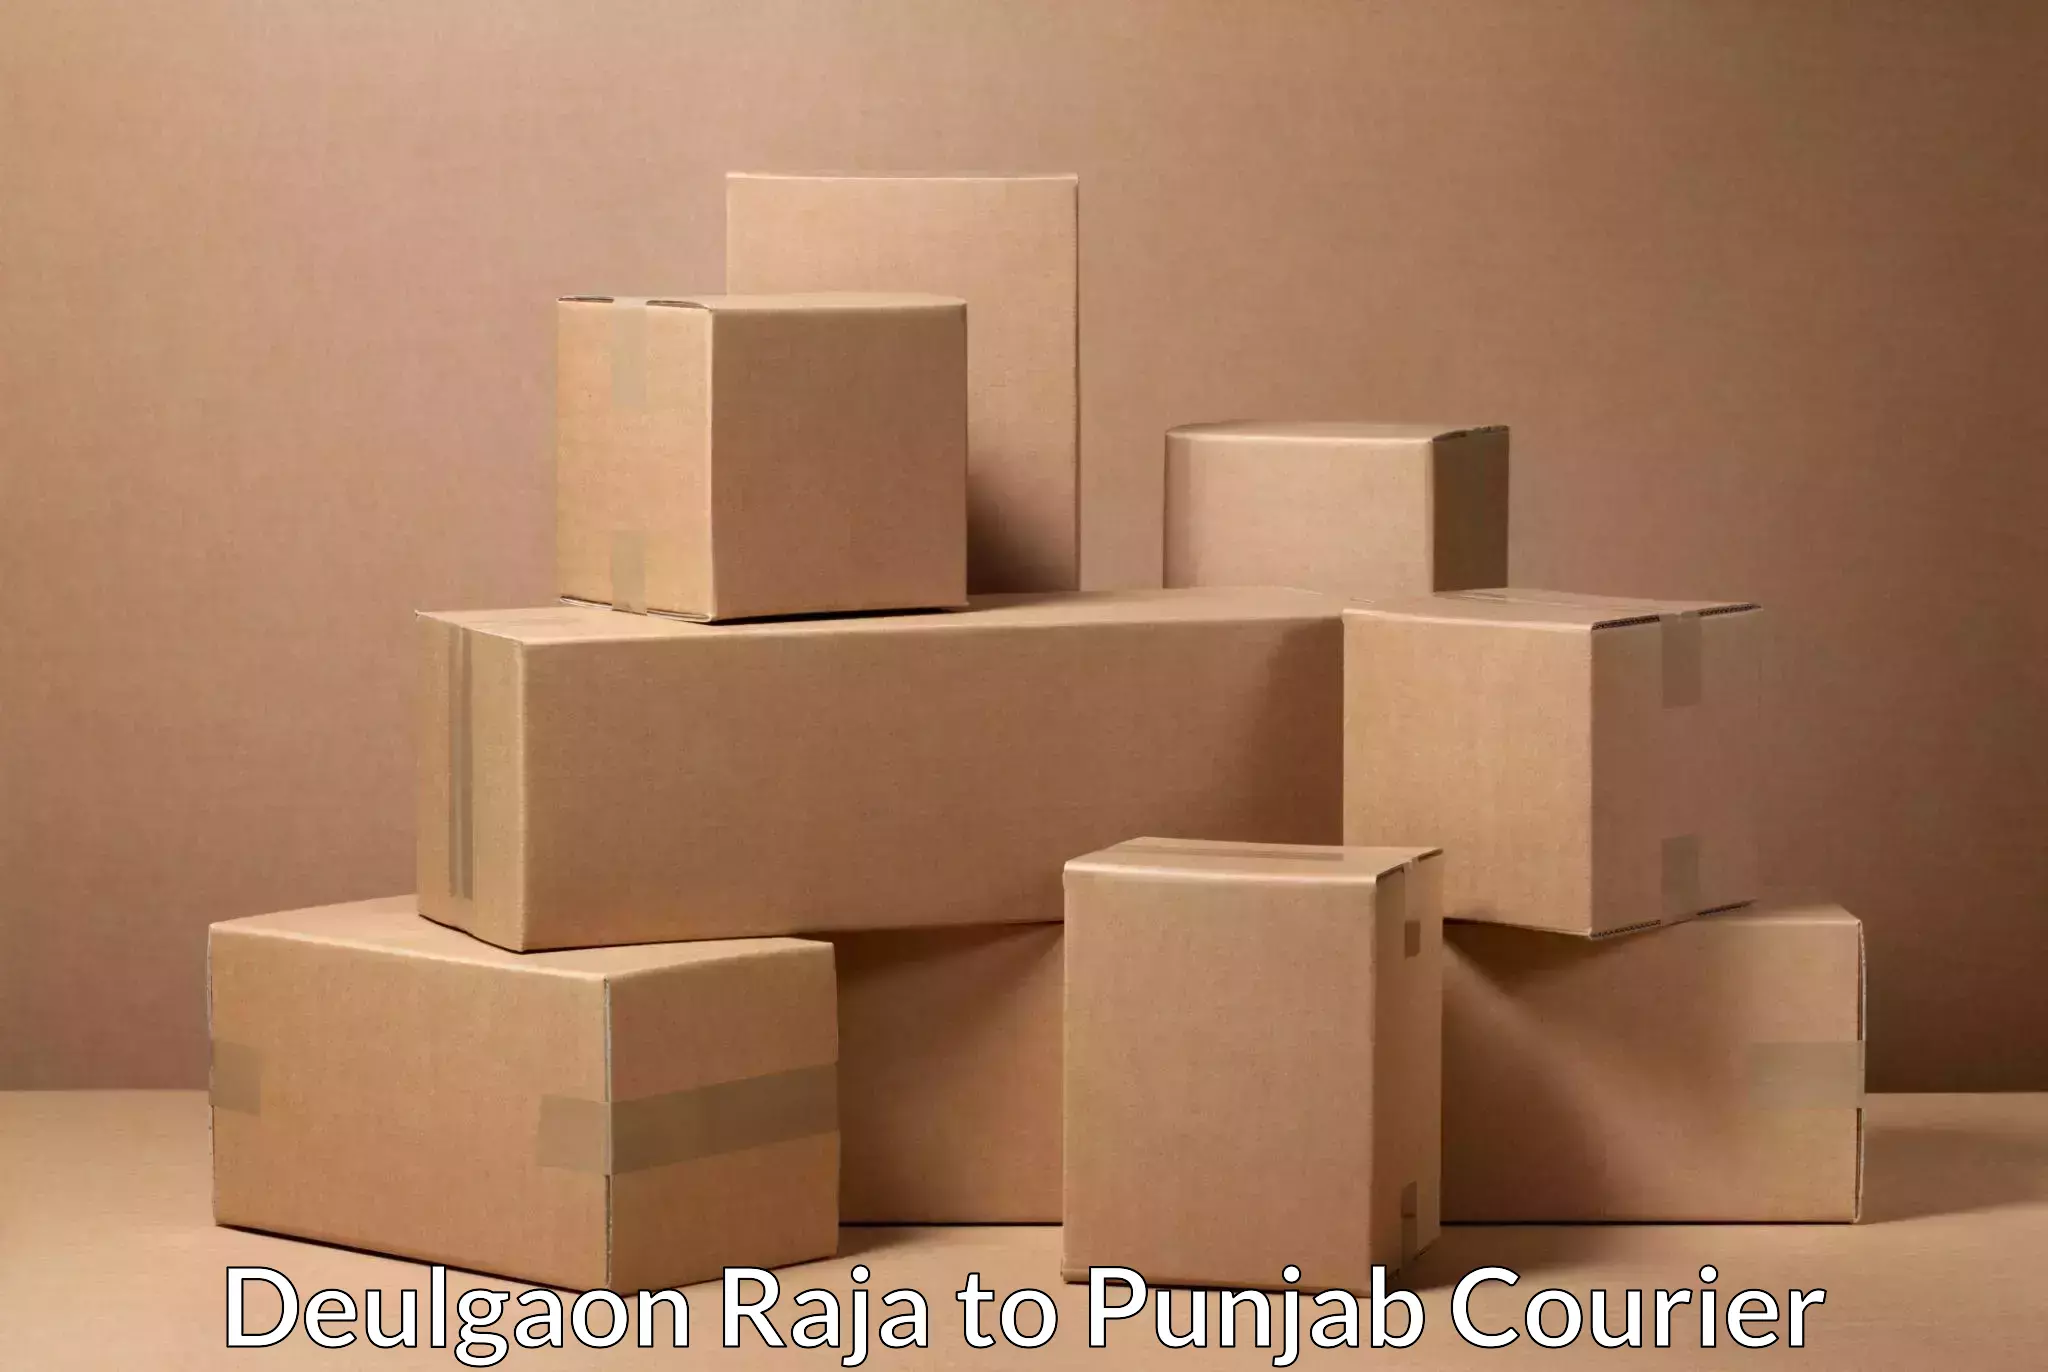 Local delivery service Deulgaon Raja to Punjab